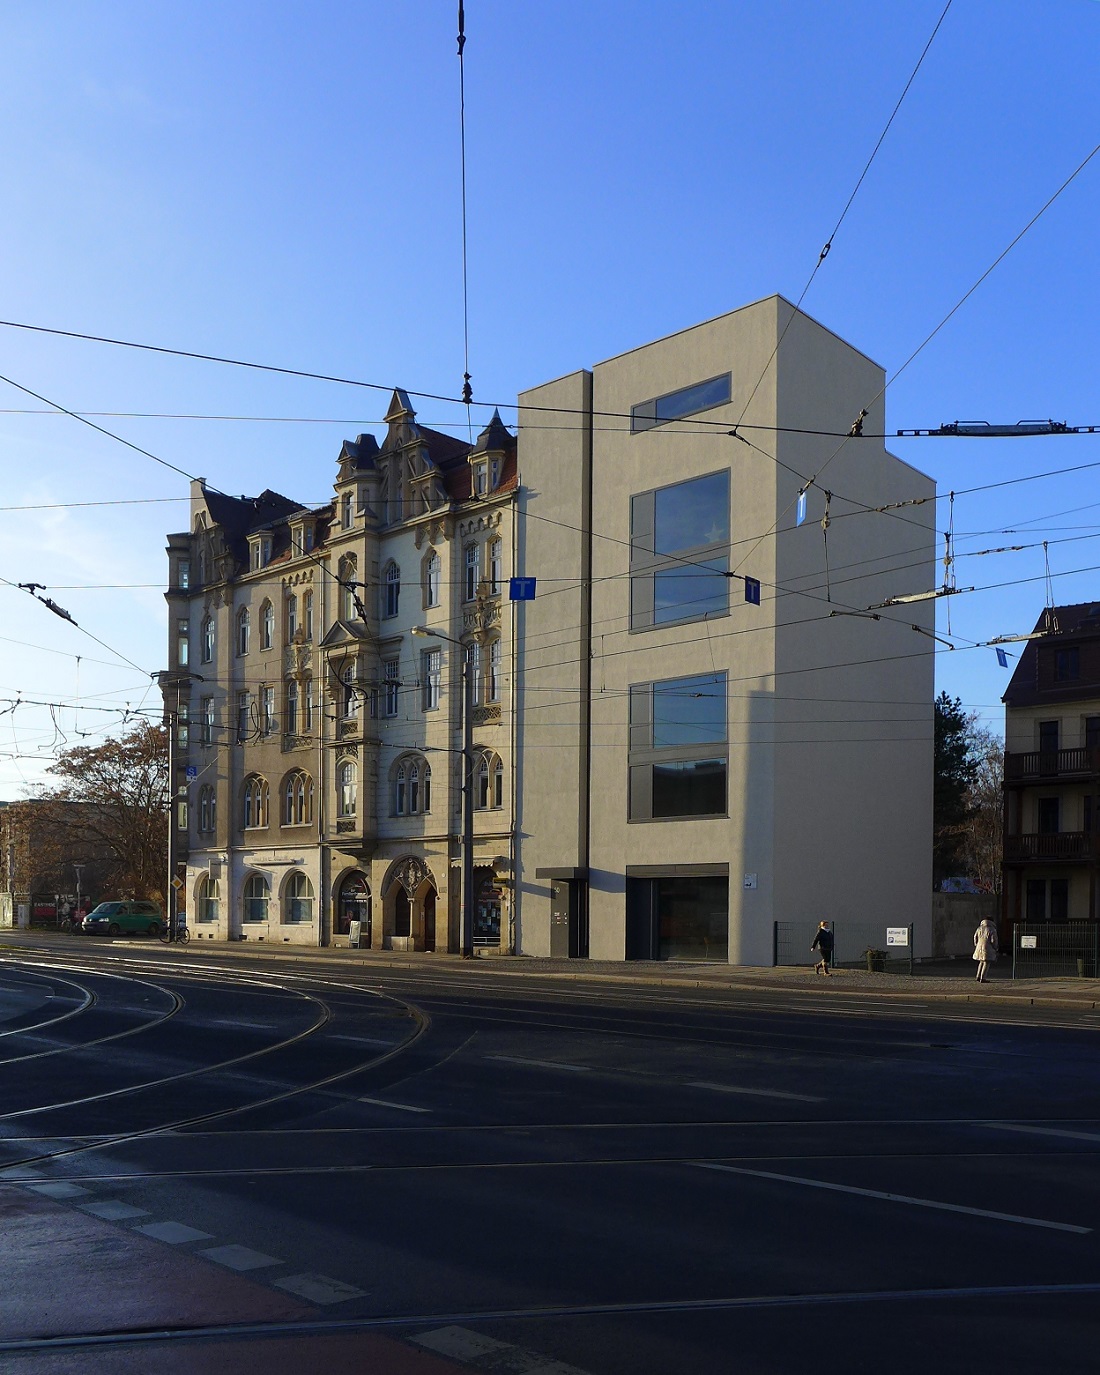 Peter Kulka, Wohnhaus KPK (Kulka-Pütz-Krüger), Dresden, 2013–2015 (Bilder: © Uwe Bresan)